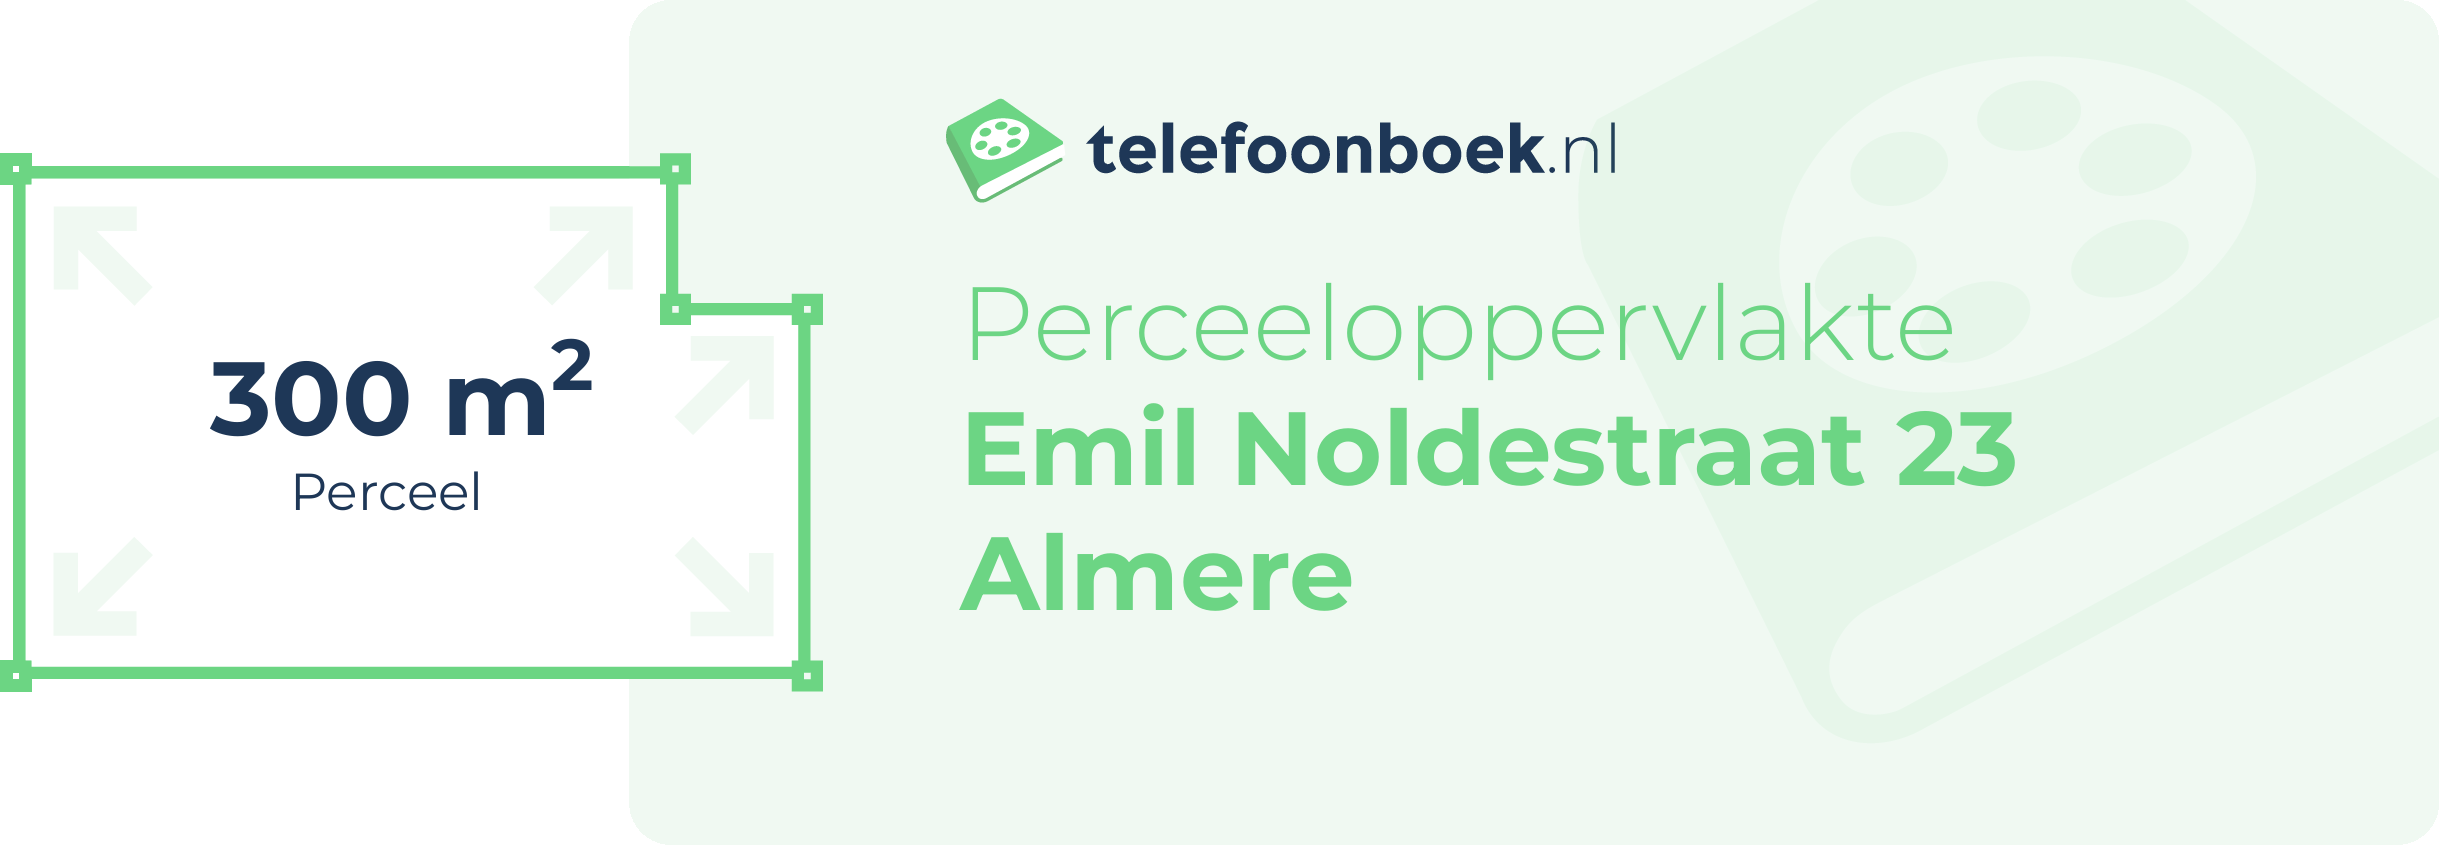 Perceeloppervlakte Emil Noldestraat 23 Almere